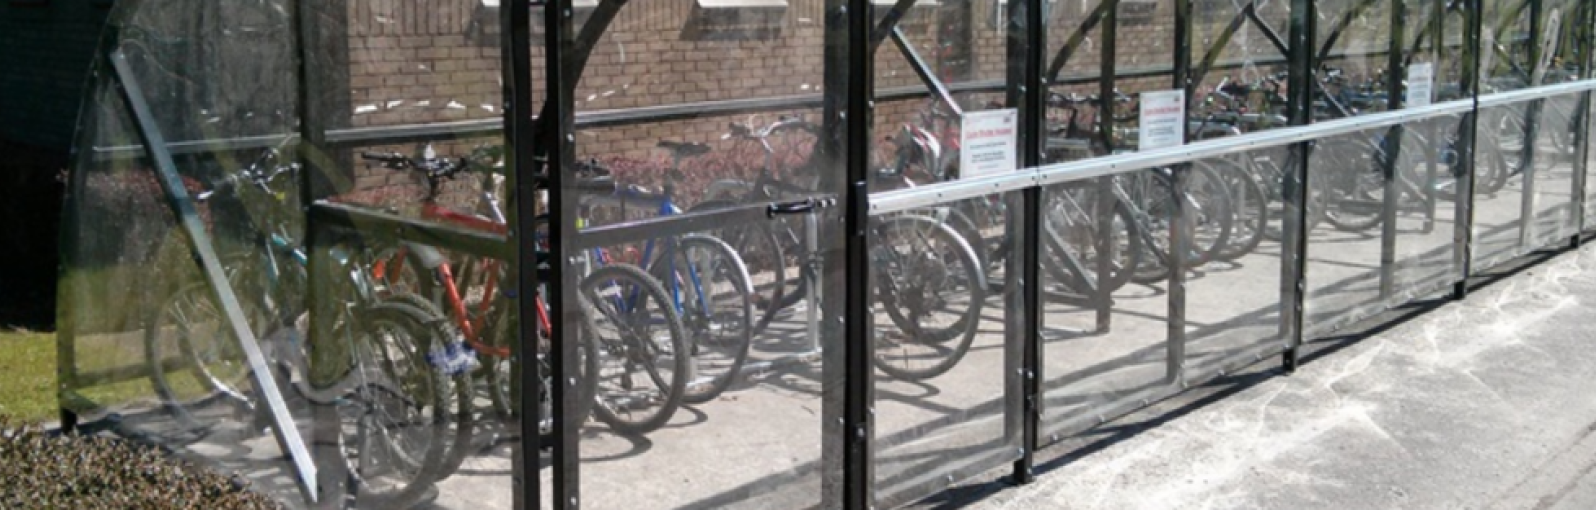 cycle shelter image